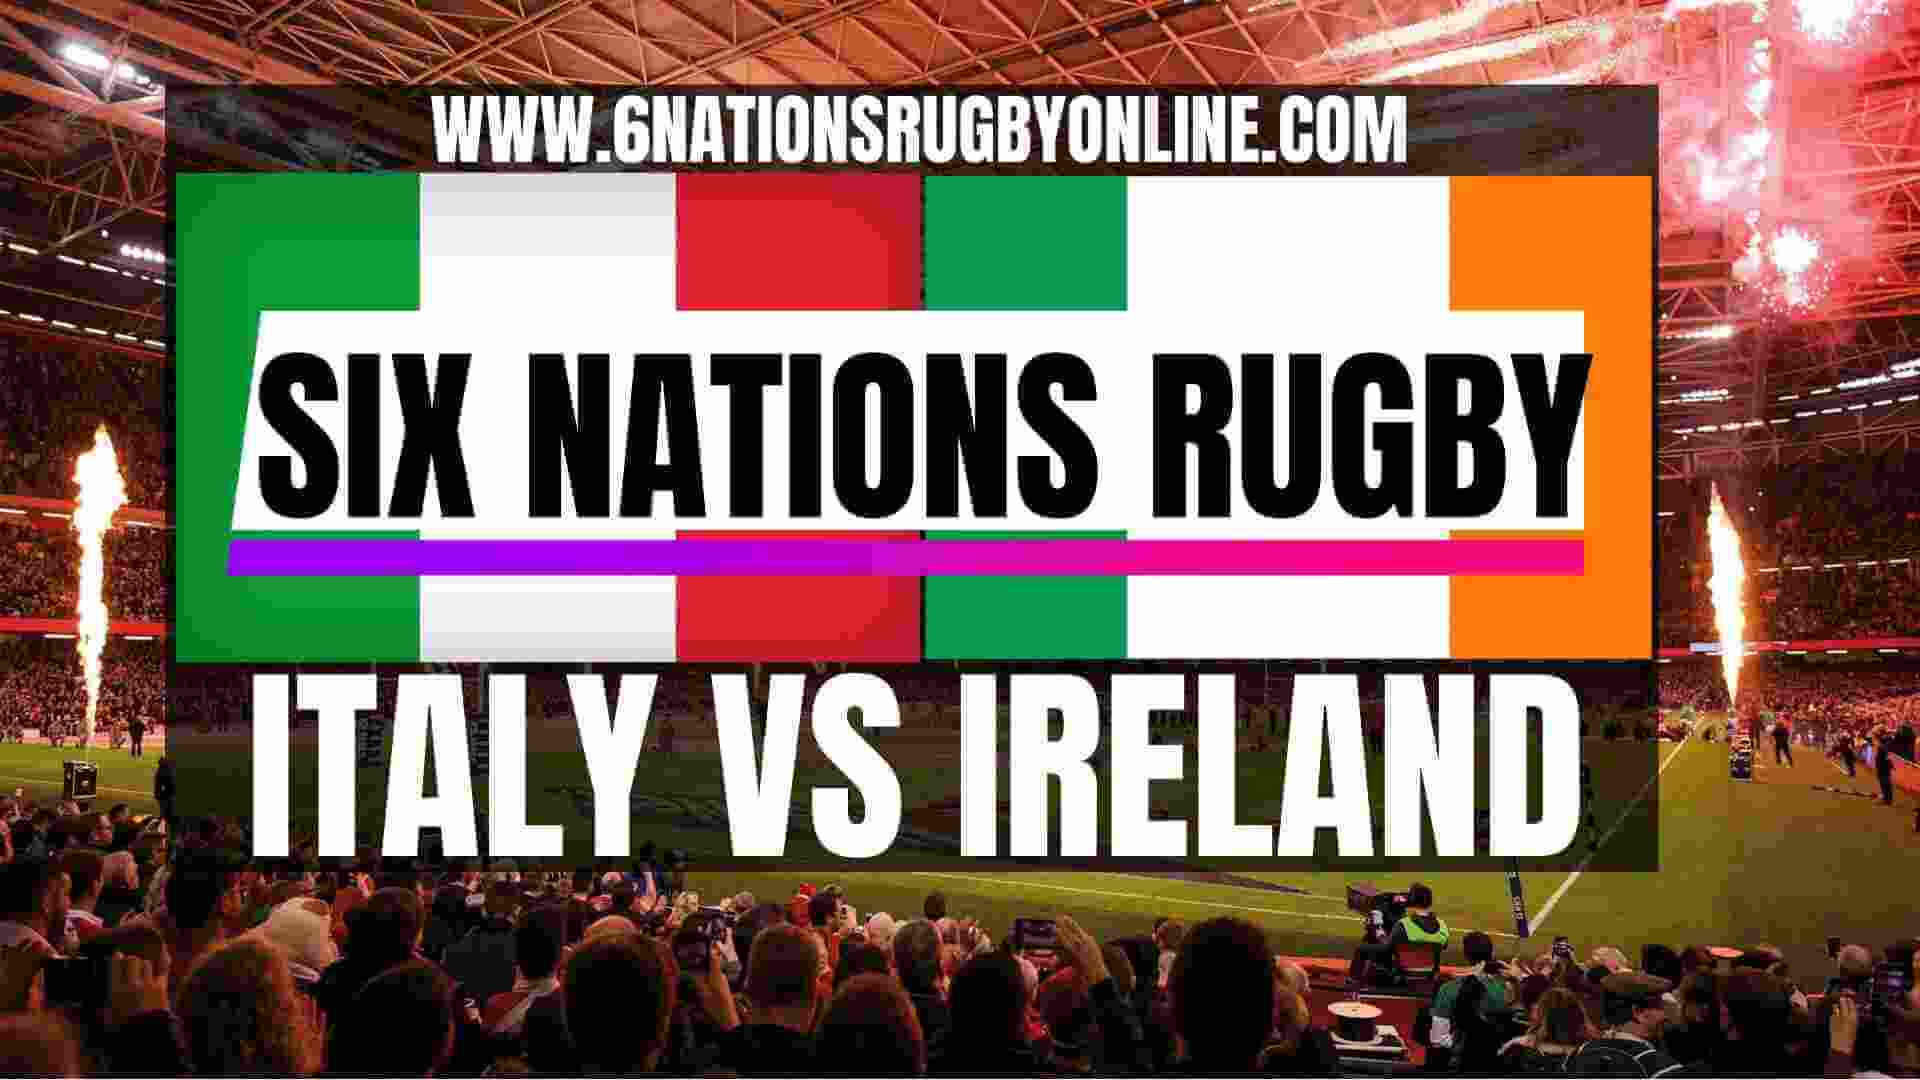 Ireland Vs Italy Rugby Live Stream On 24 Feb 2019